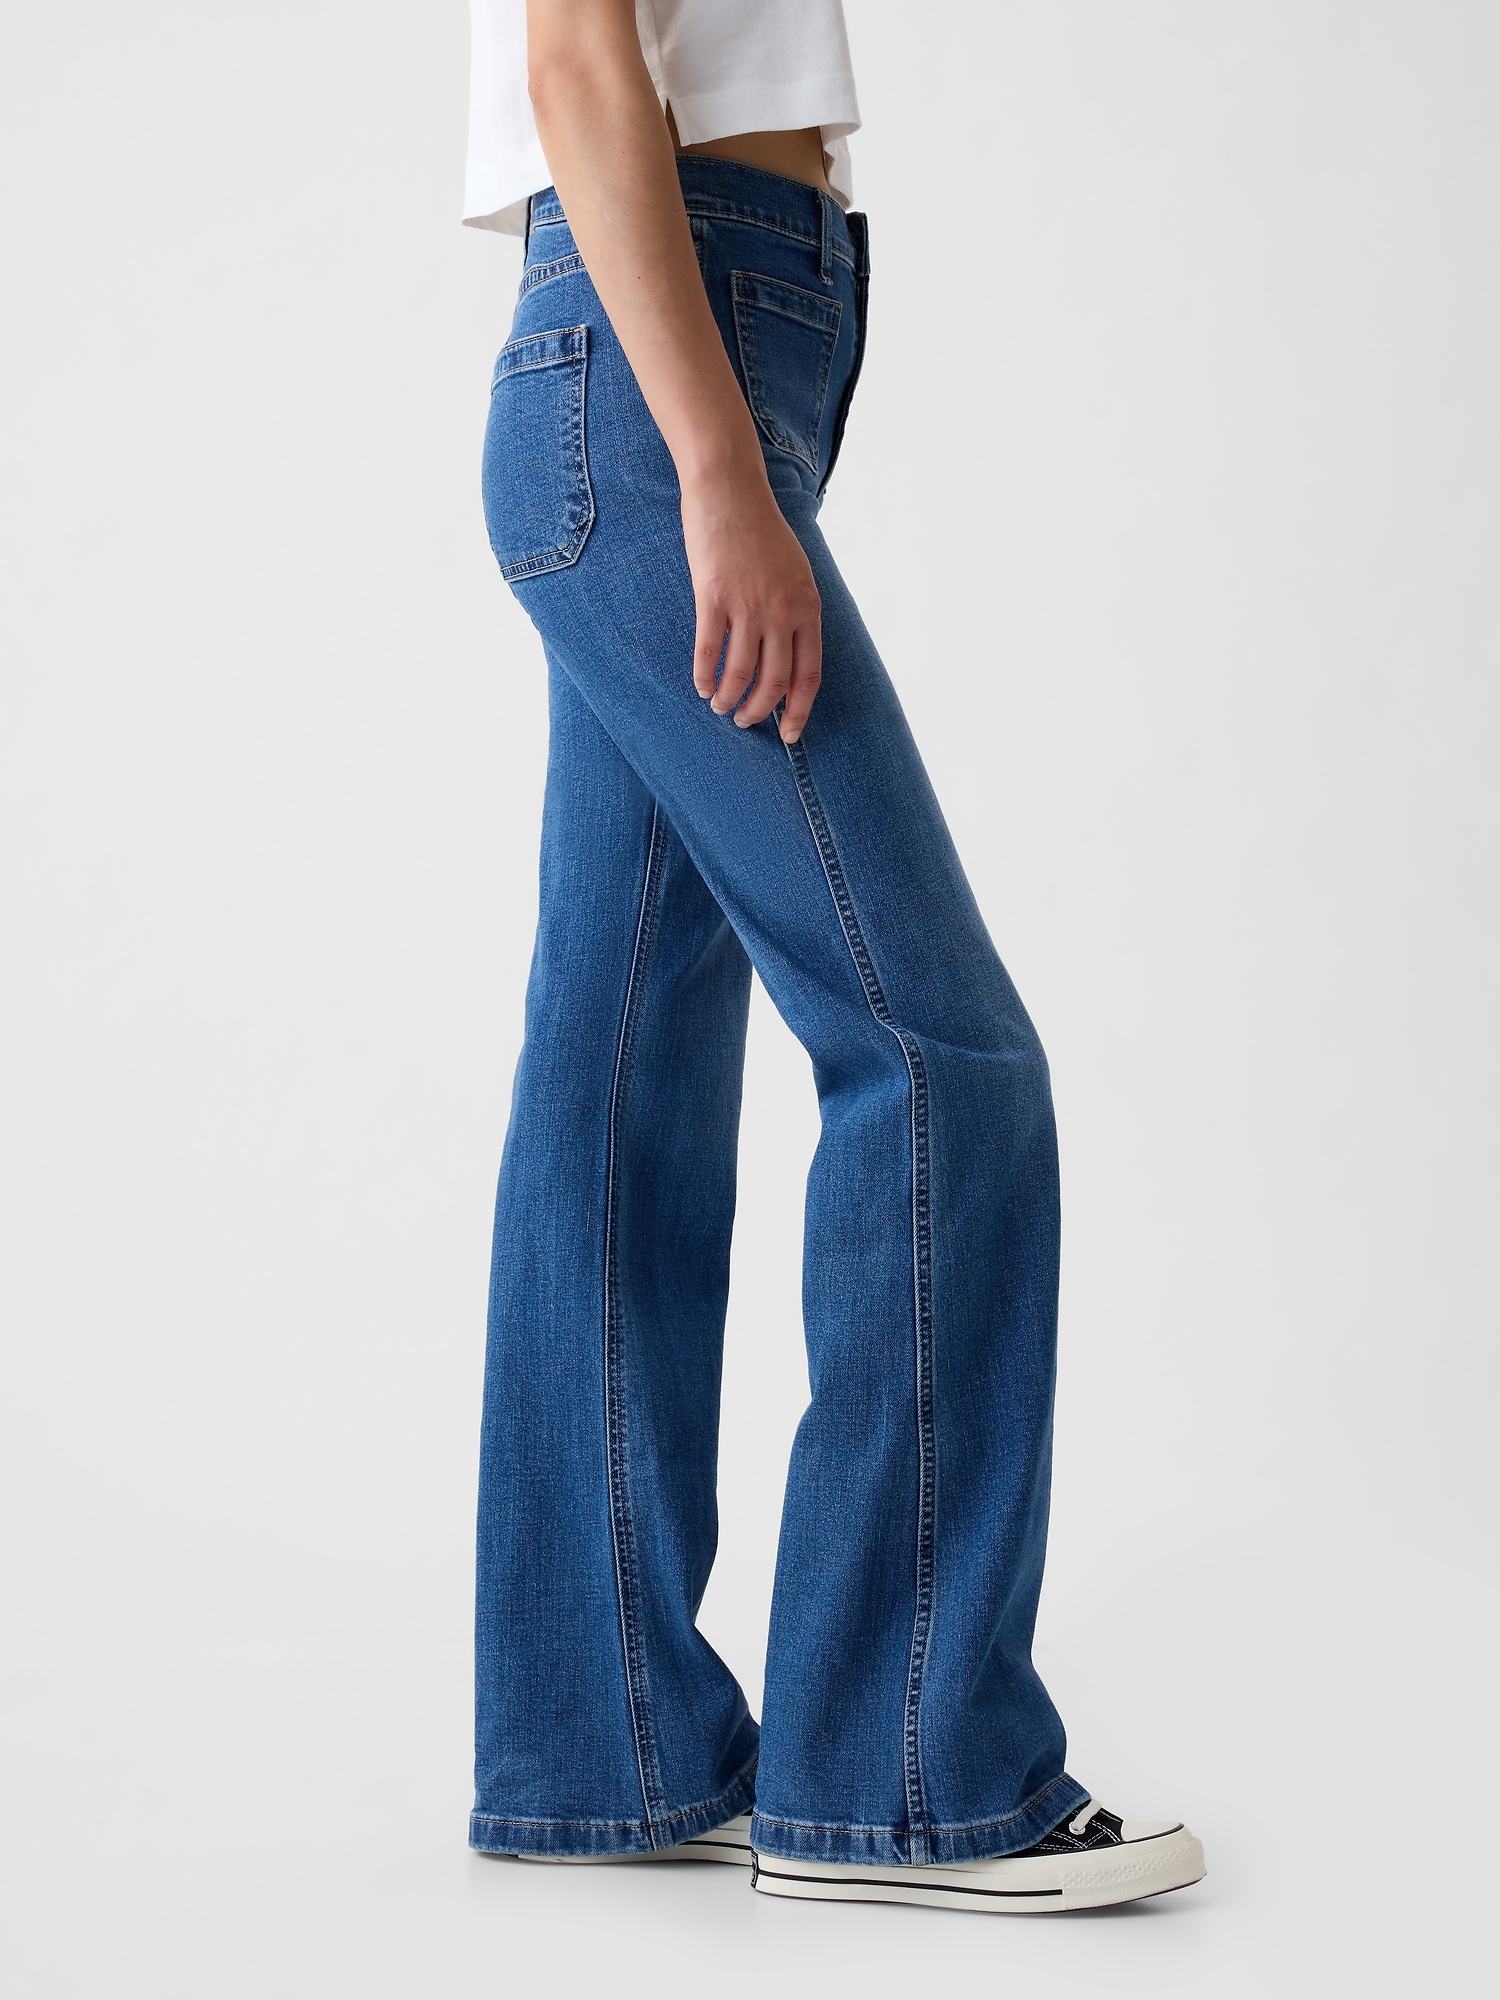 Women Vintage Bell Bottom Jeans Solid Color High Waisted Jeans Slim Fit Flared  Jeans 70s Flared Denim Pants 